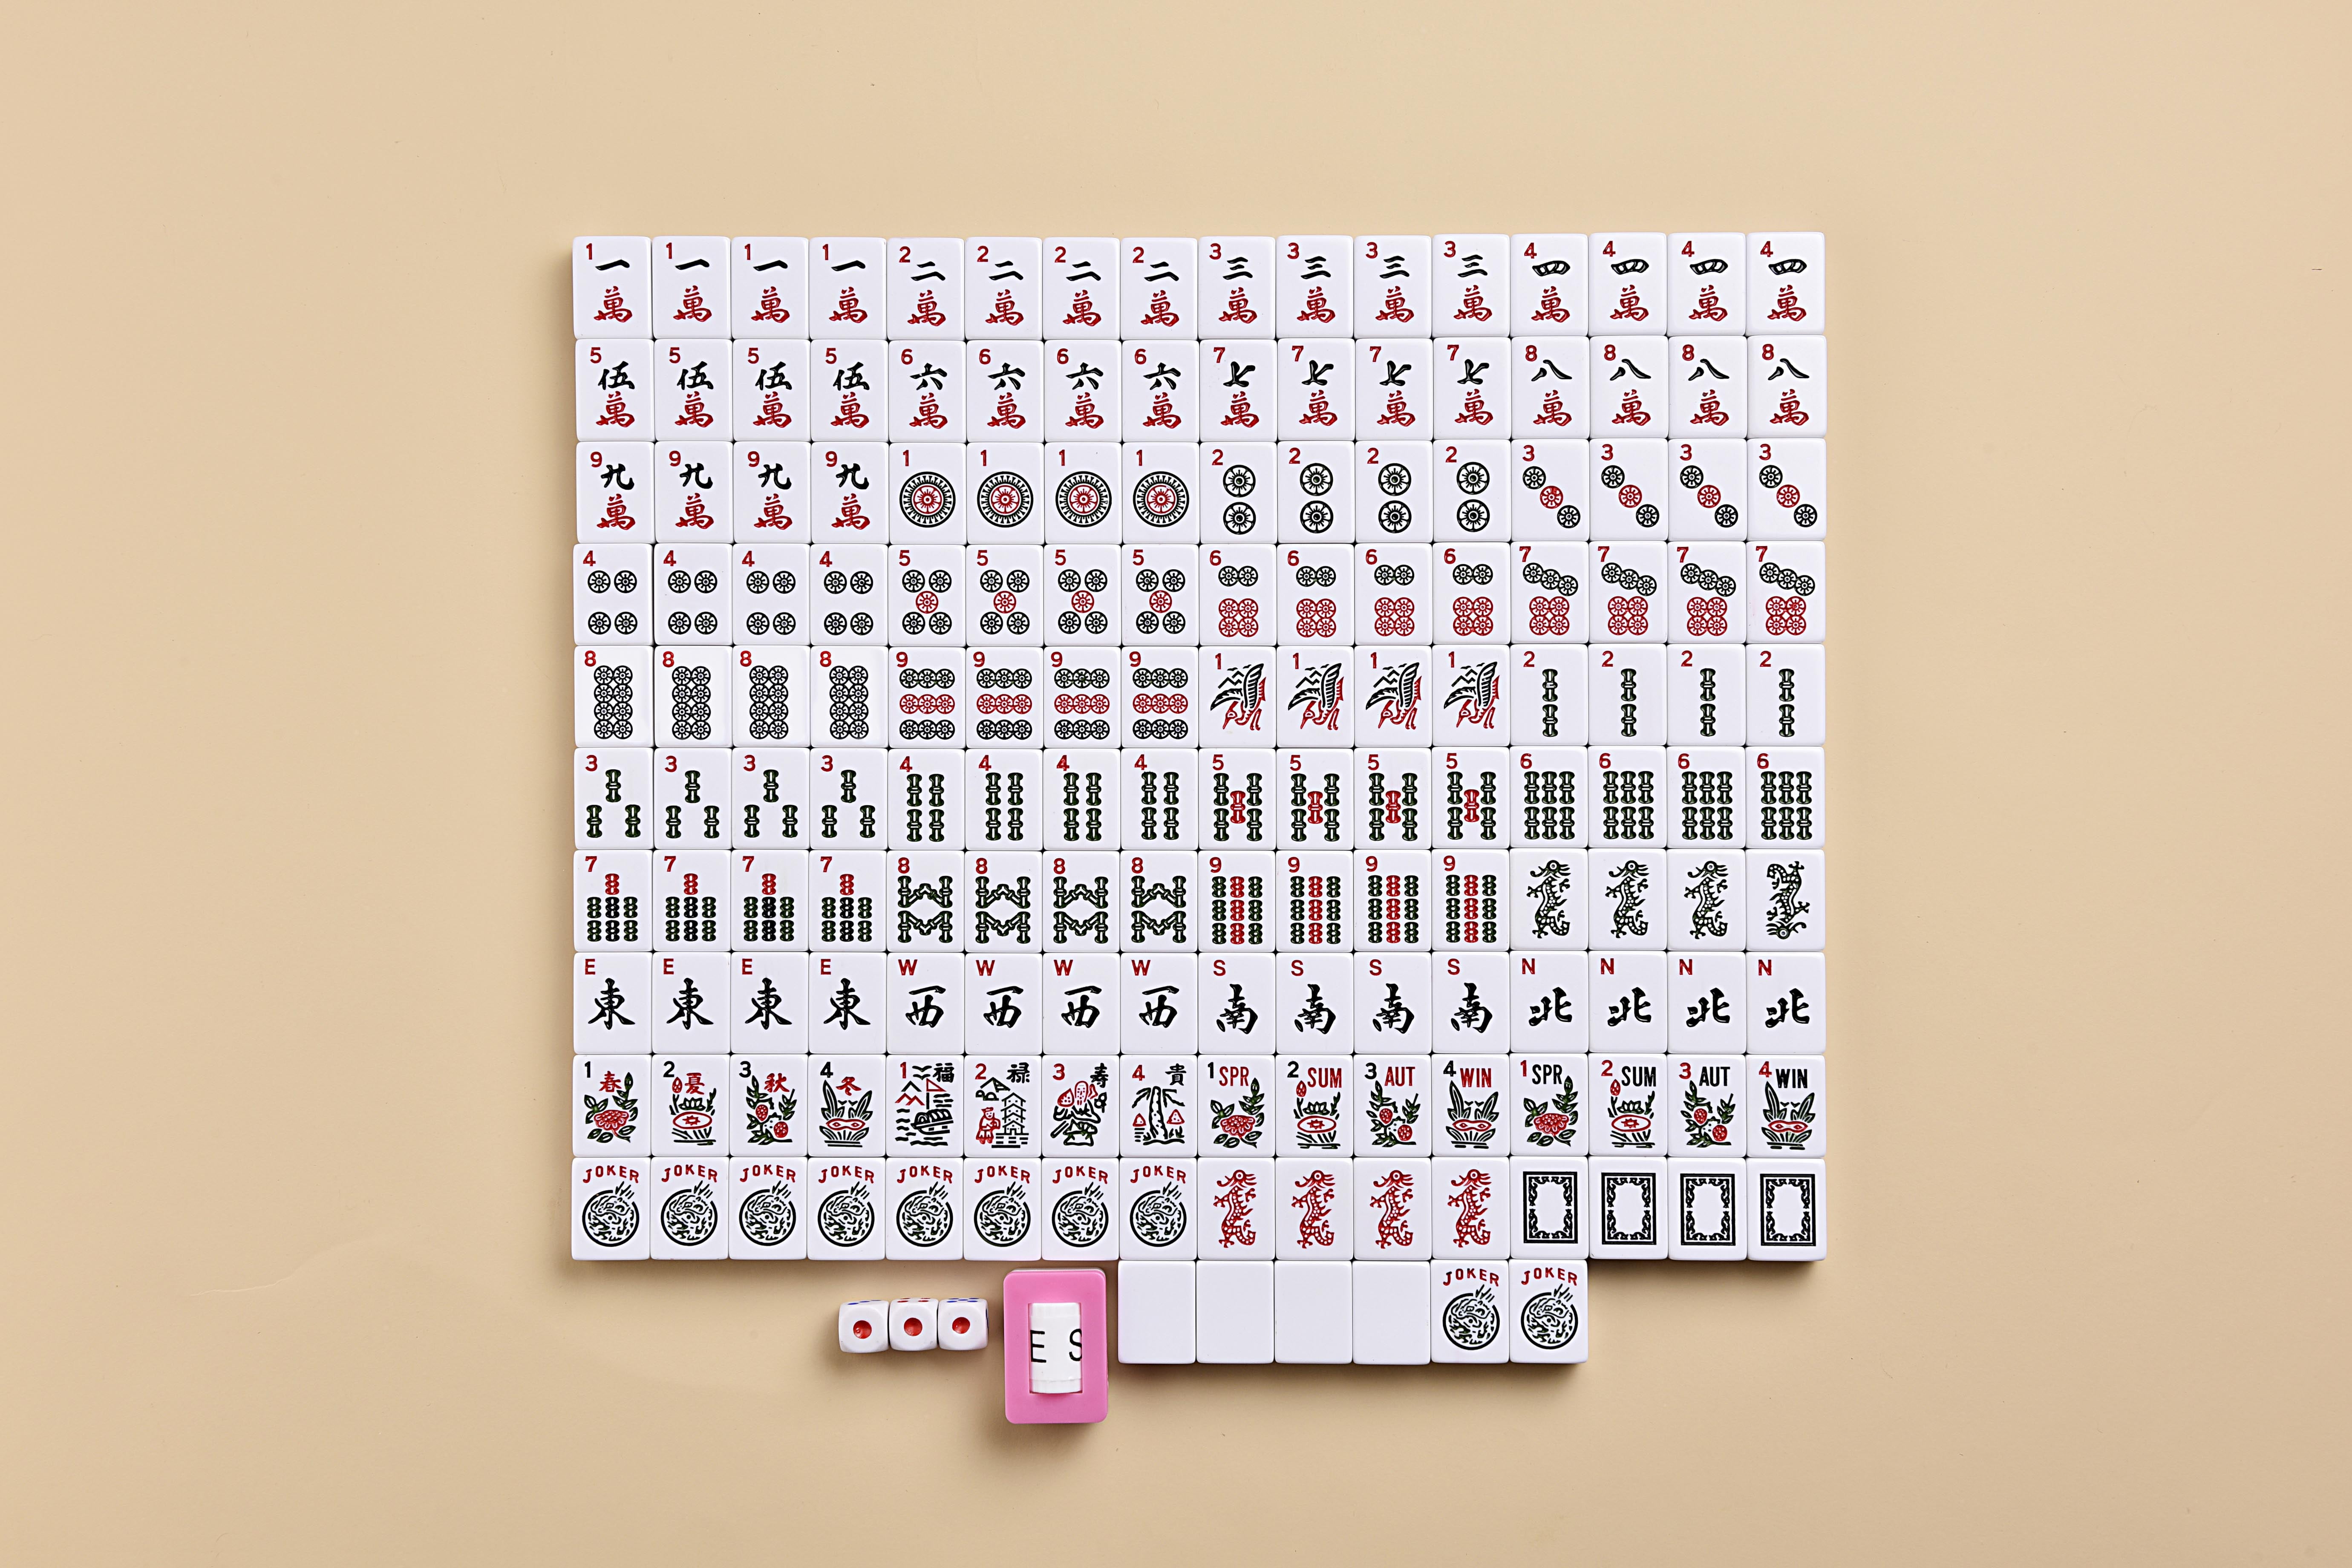 QUANTA American Mahjong Set - Pink Soft Bag, 166 Premium White Tiles, 4  All-in-One Rack/Pushers, Mah Jongg Game Set(Pink) : Buy Online at Best  Price in KSA - Souq is now 